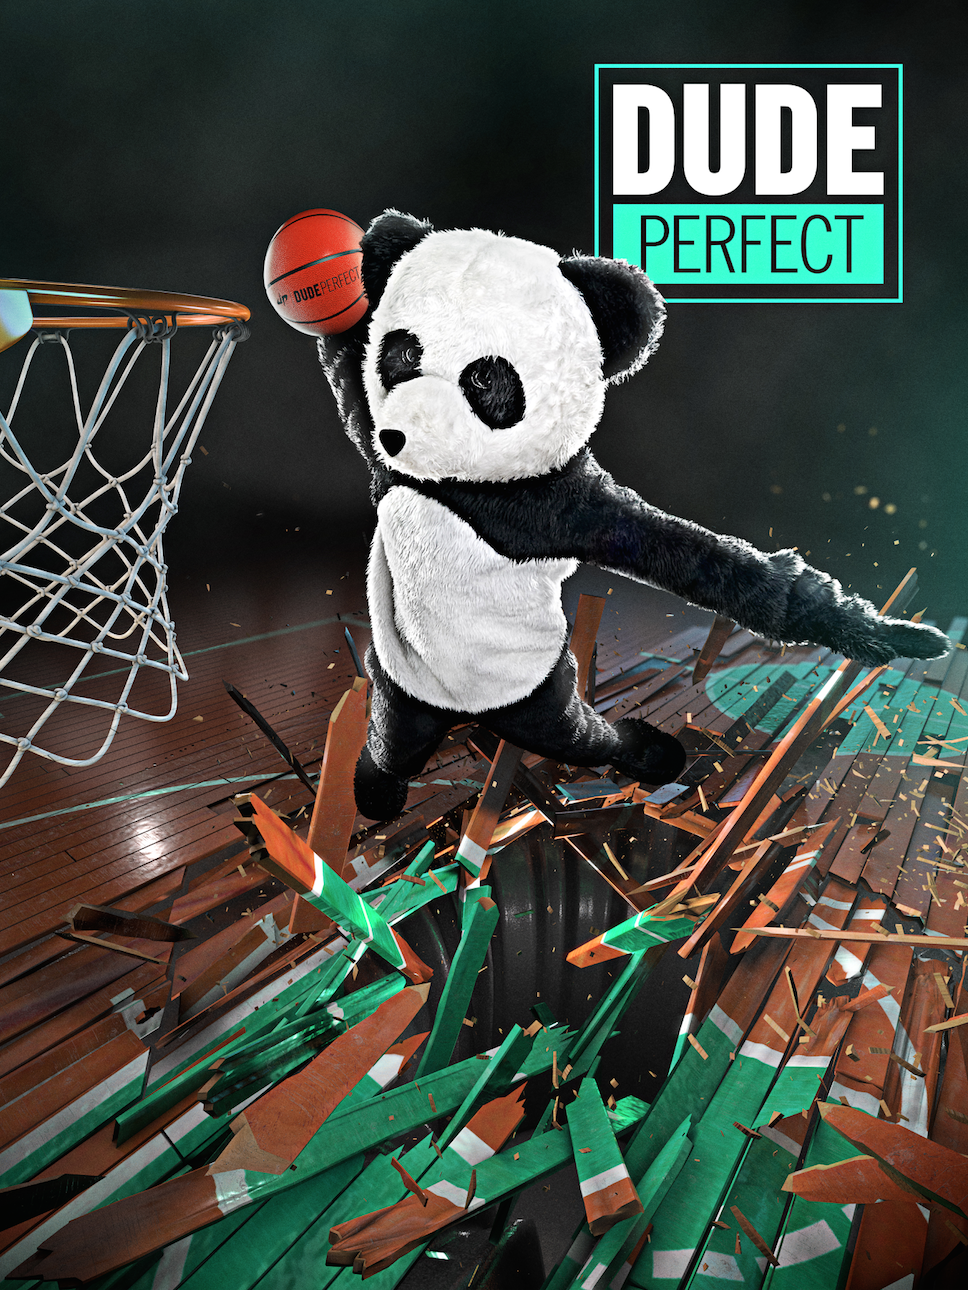 Dude perfect panda hero.